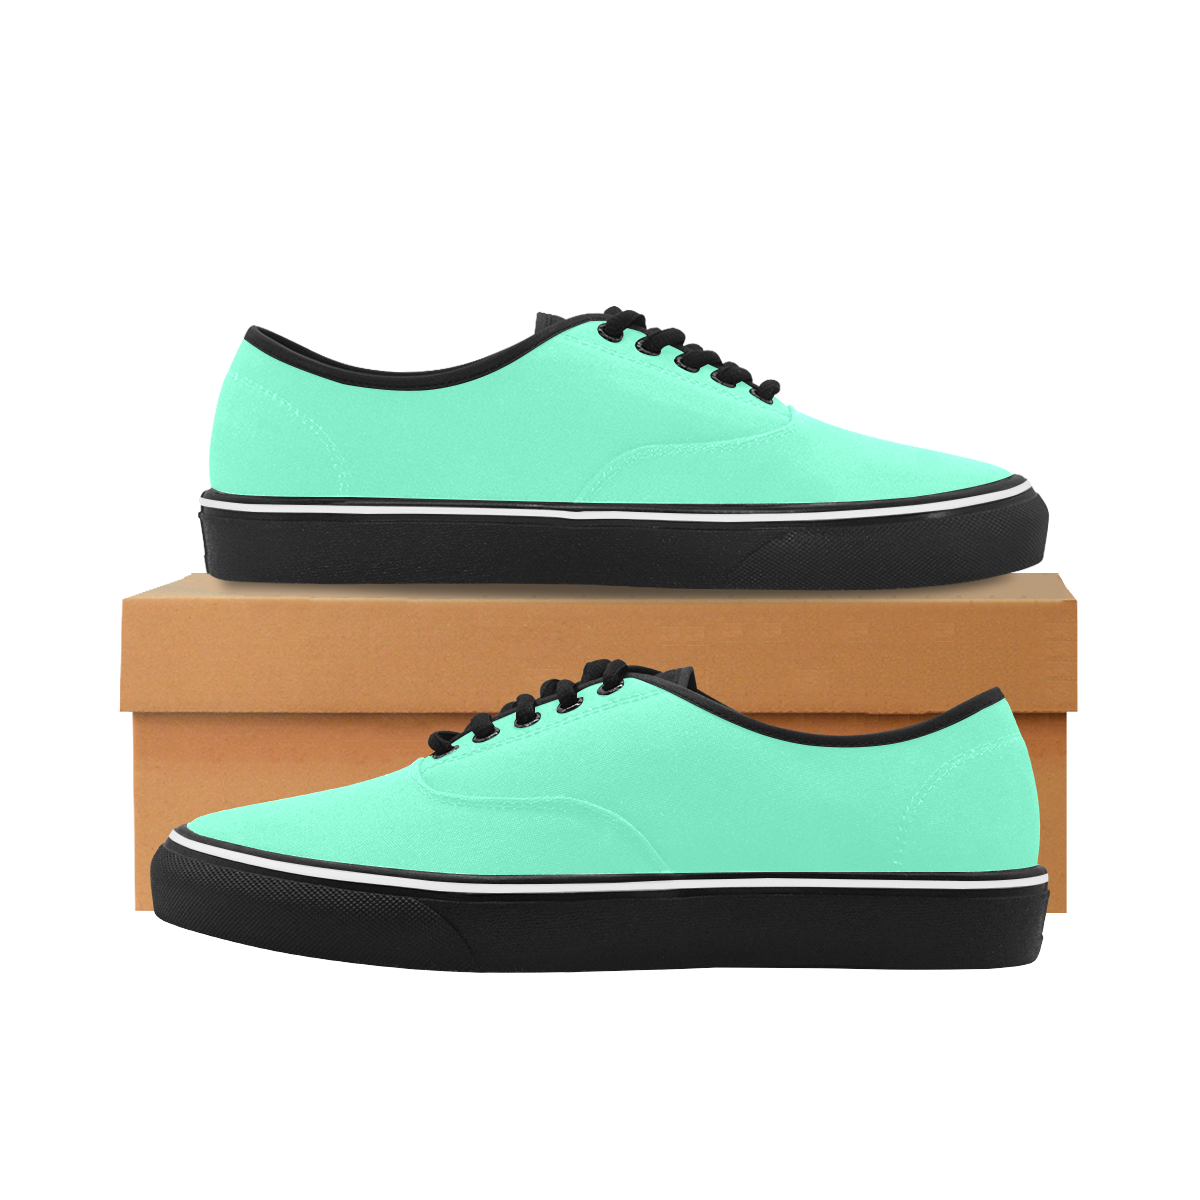 color aquamarine Classic Men's Canvas Low Top Shoes (Model E001-4)